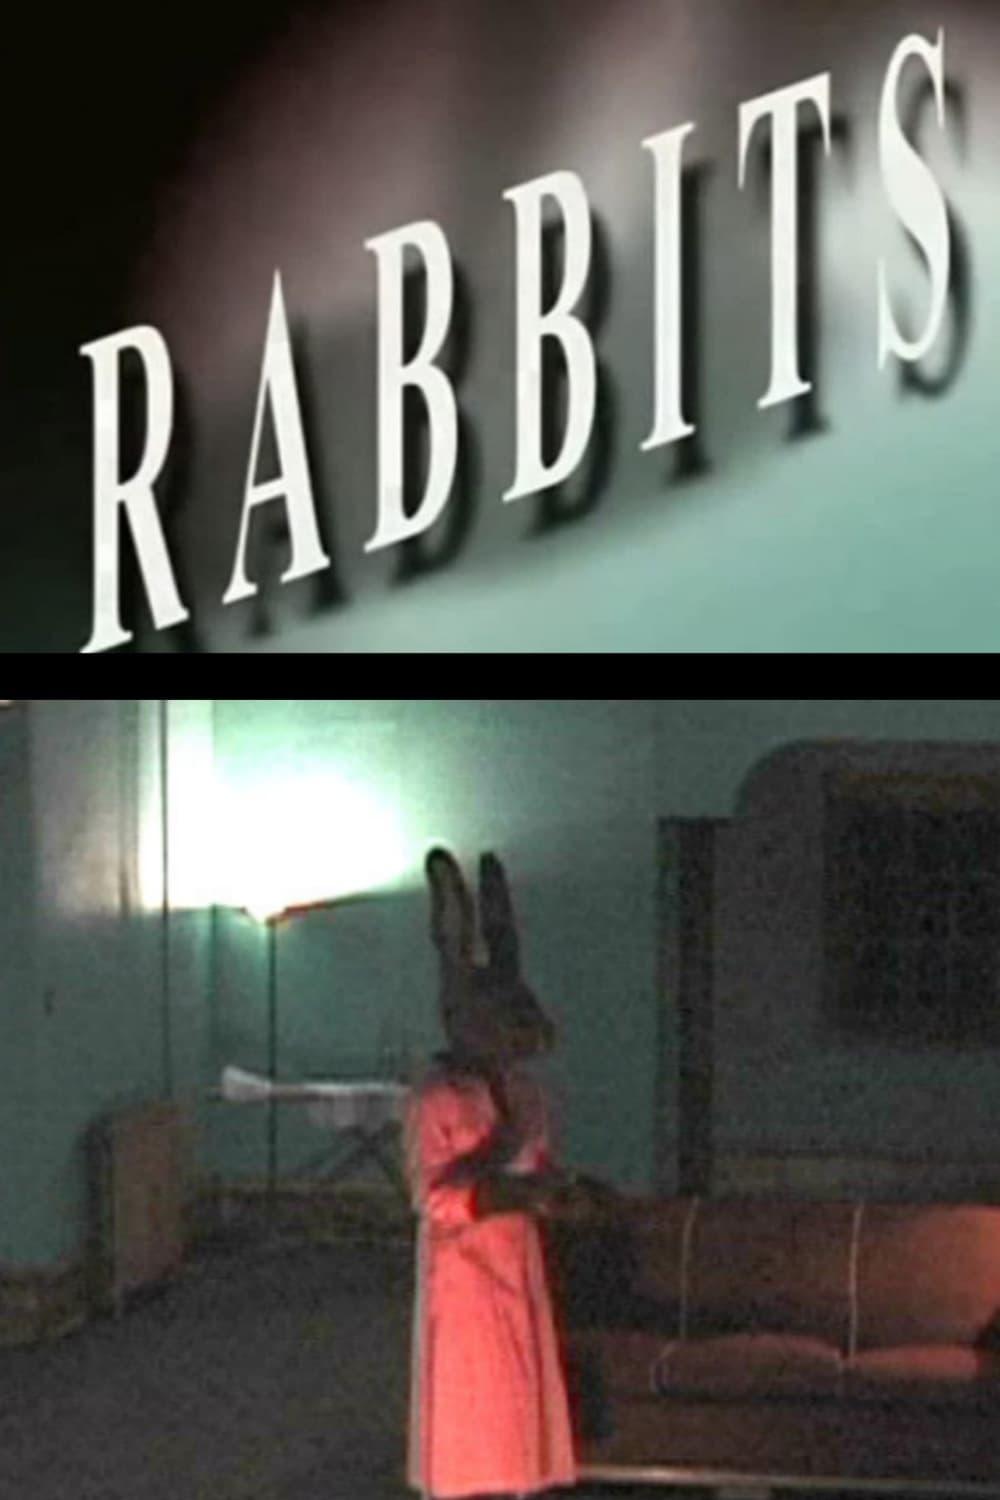 Rabbits poster